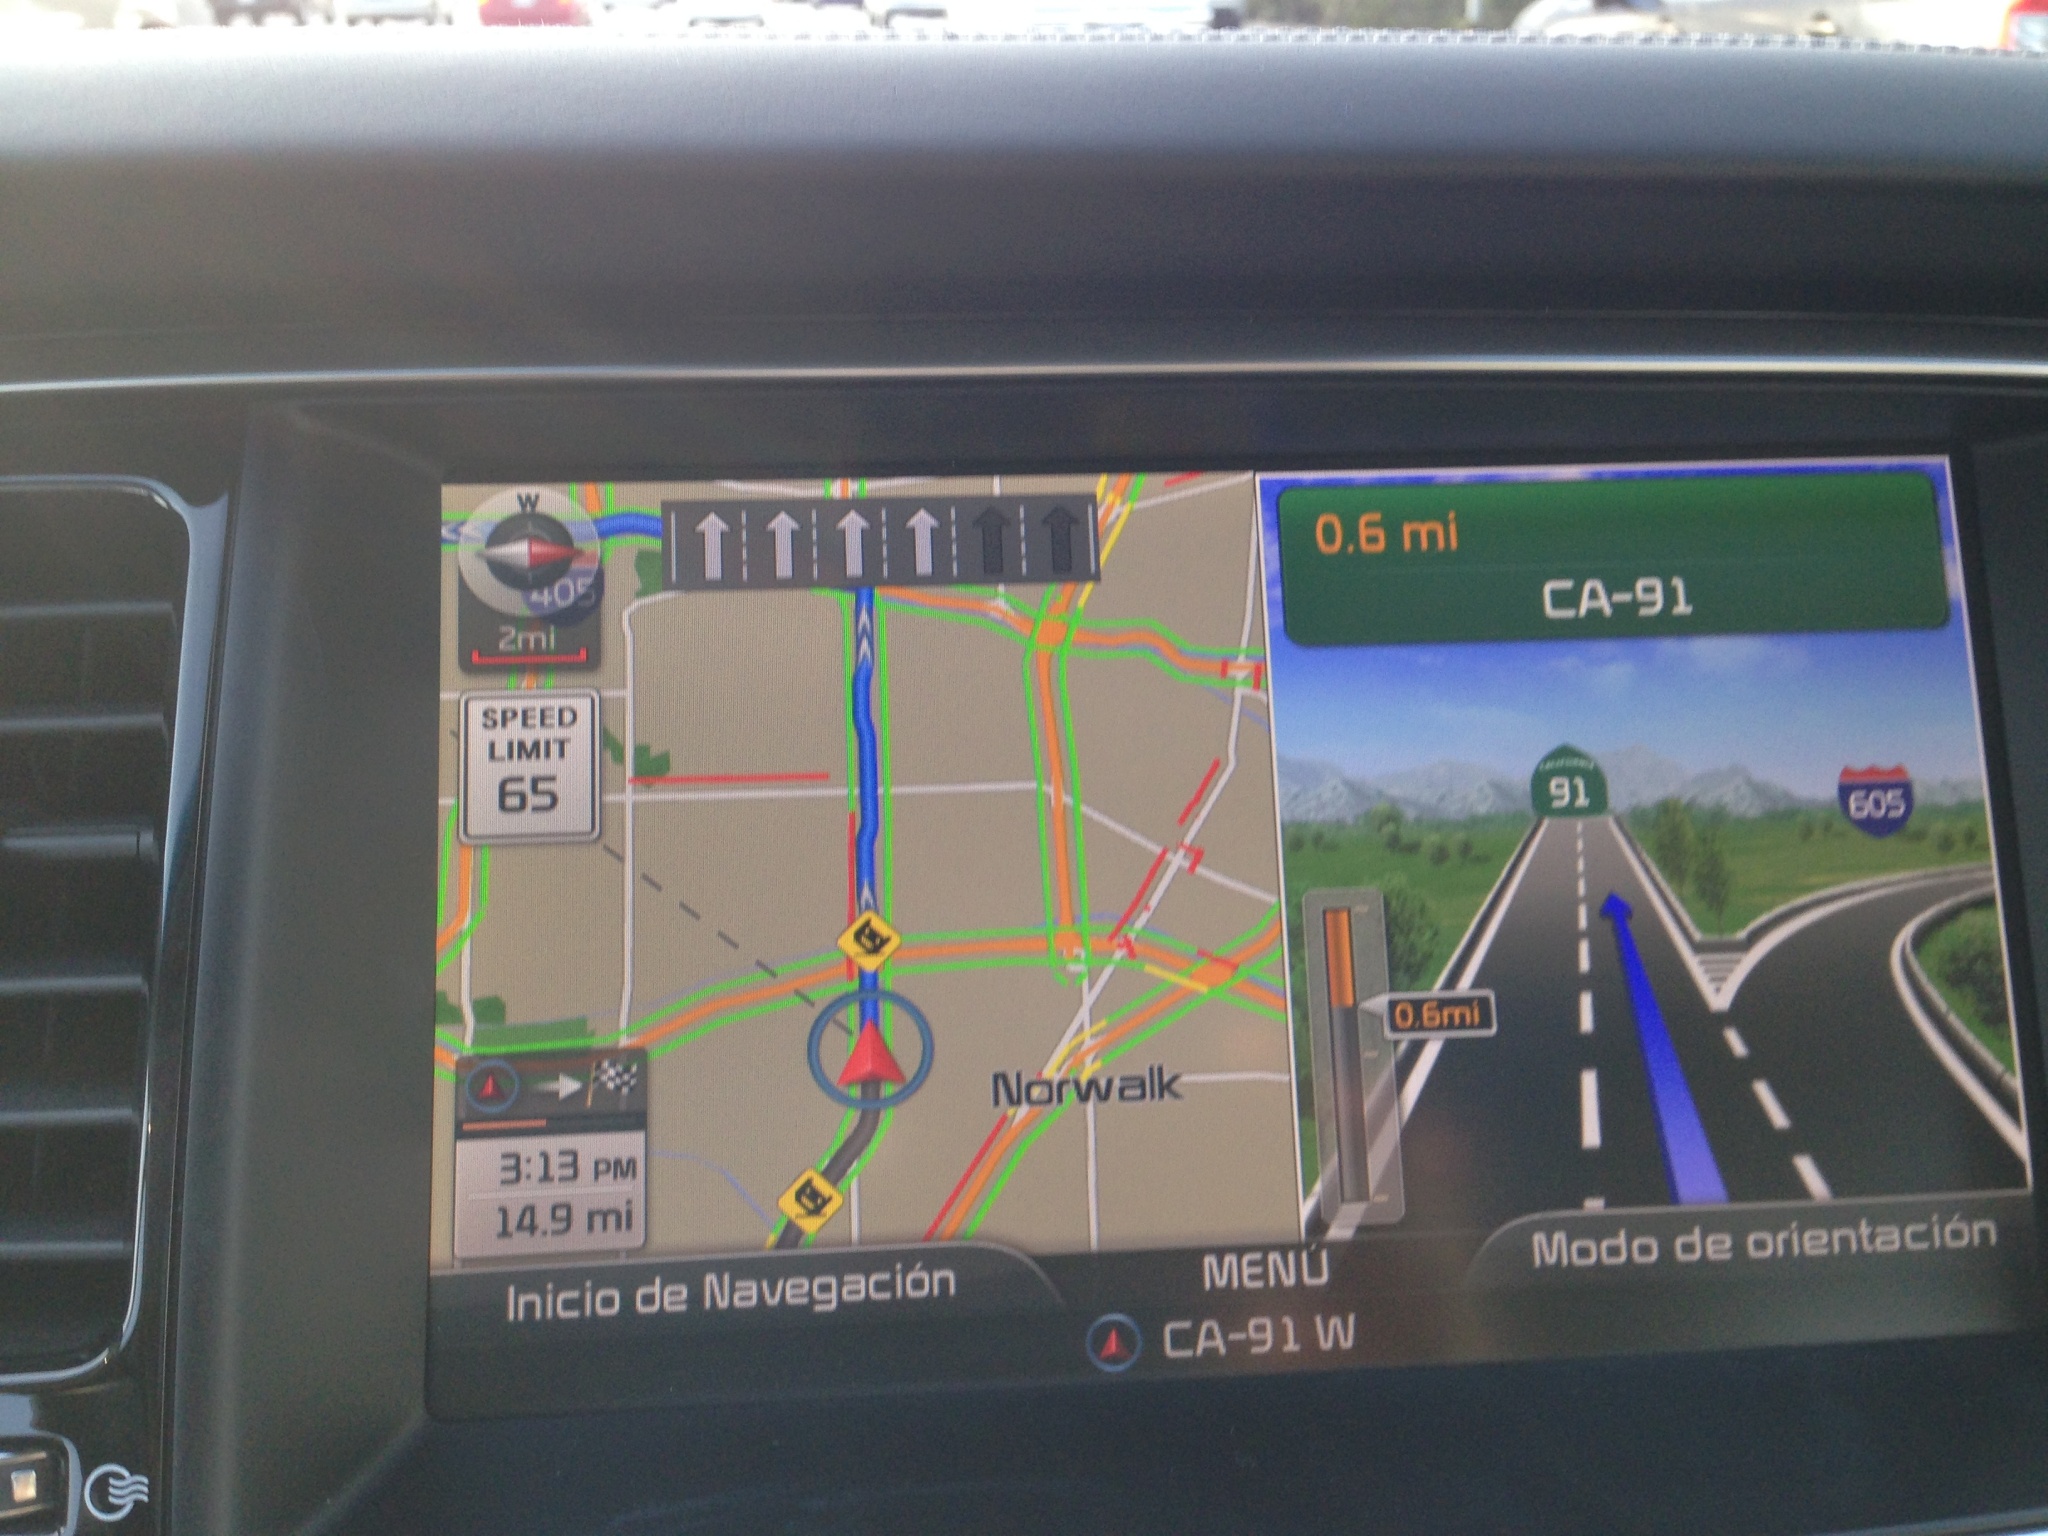 The Kia K900 GPS display